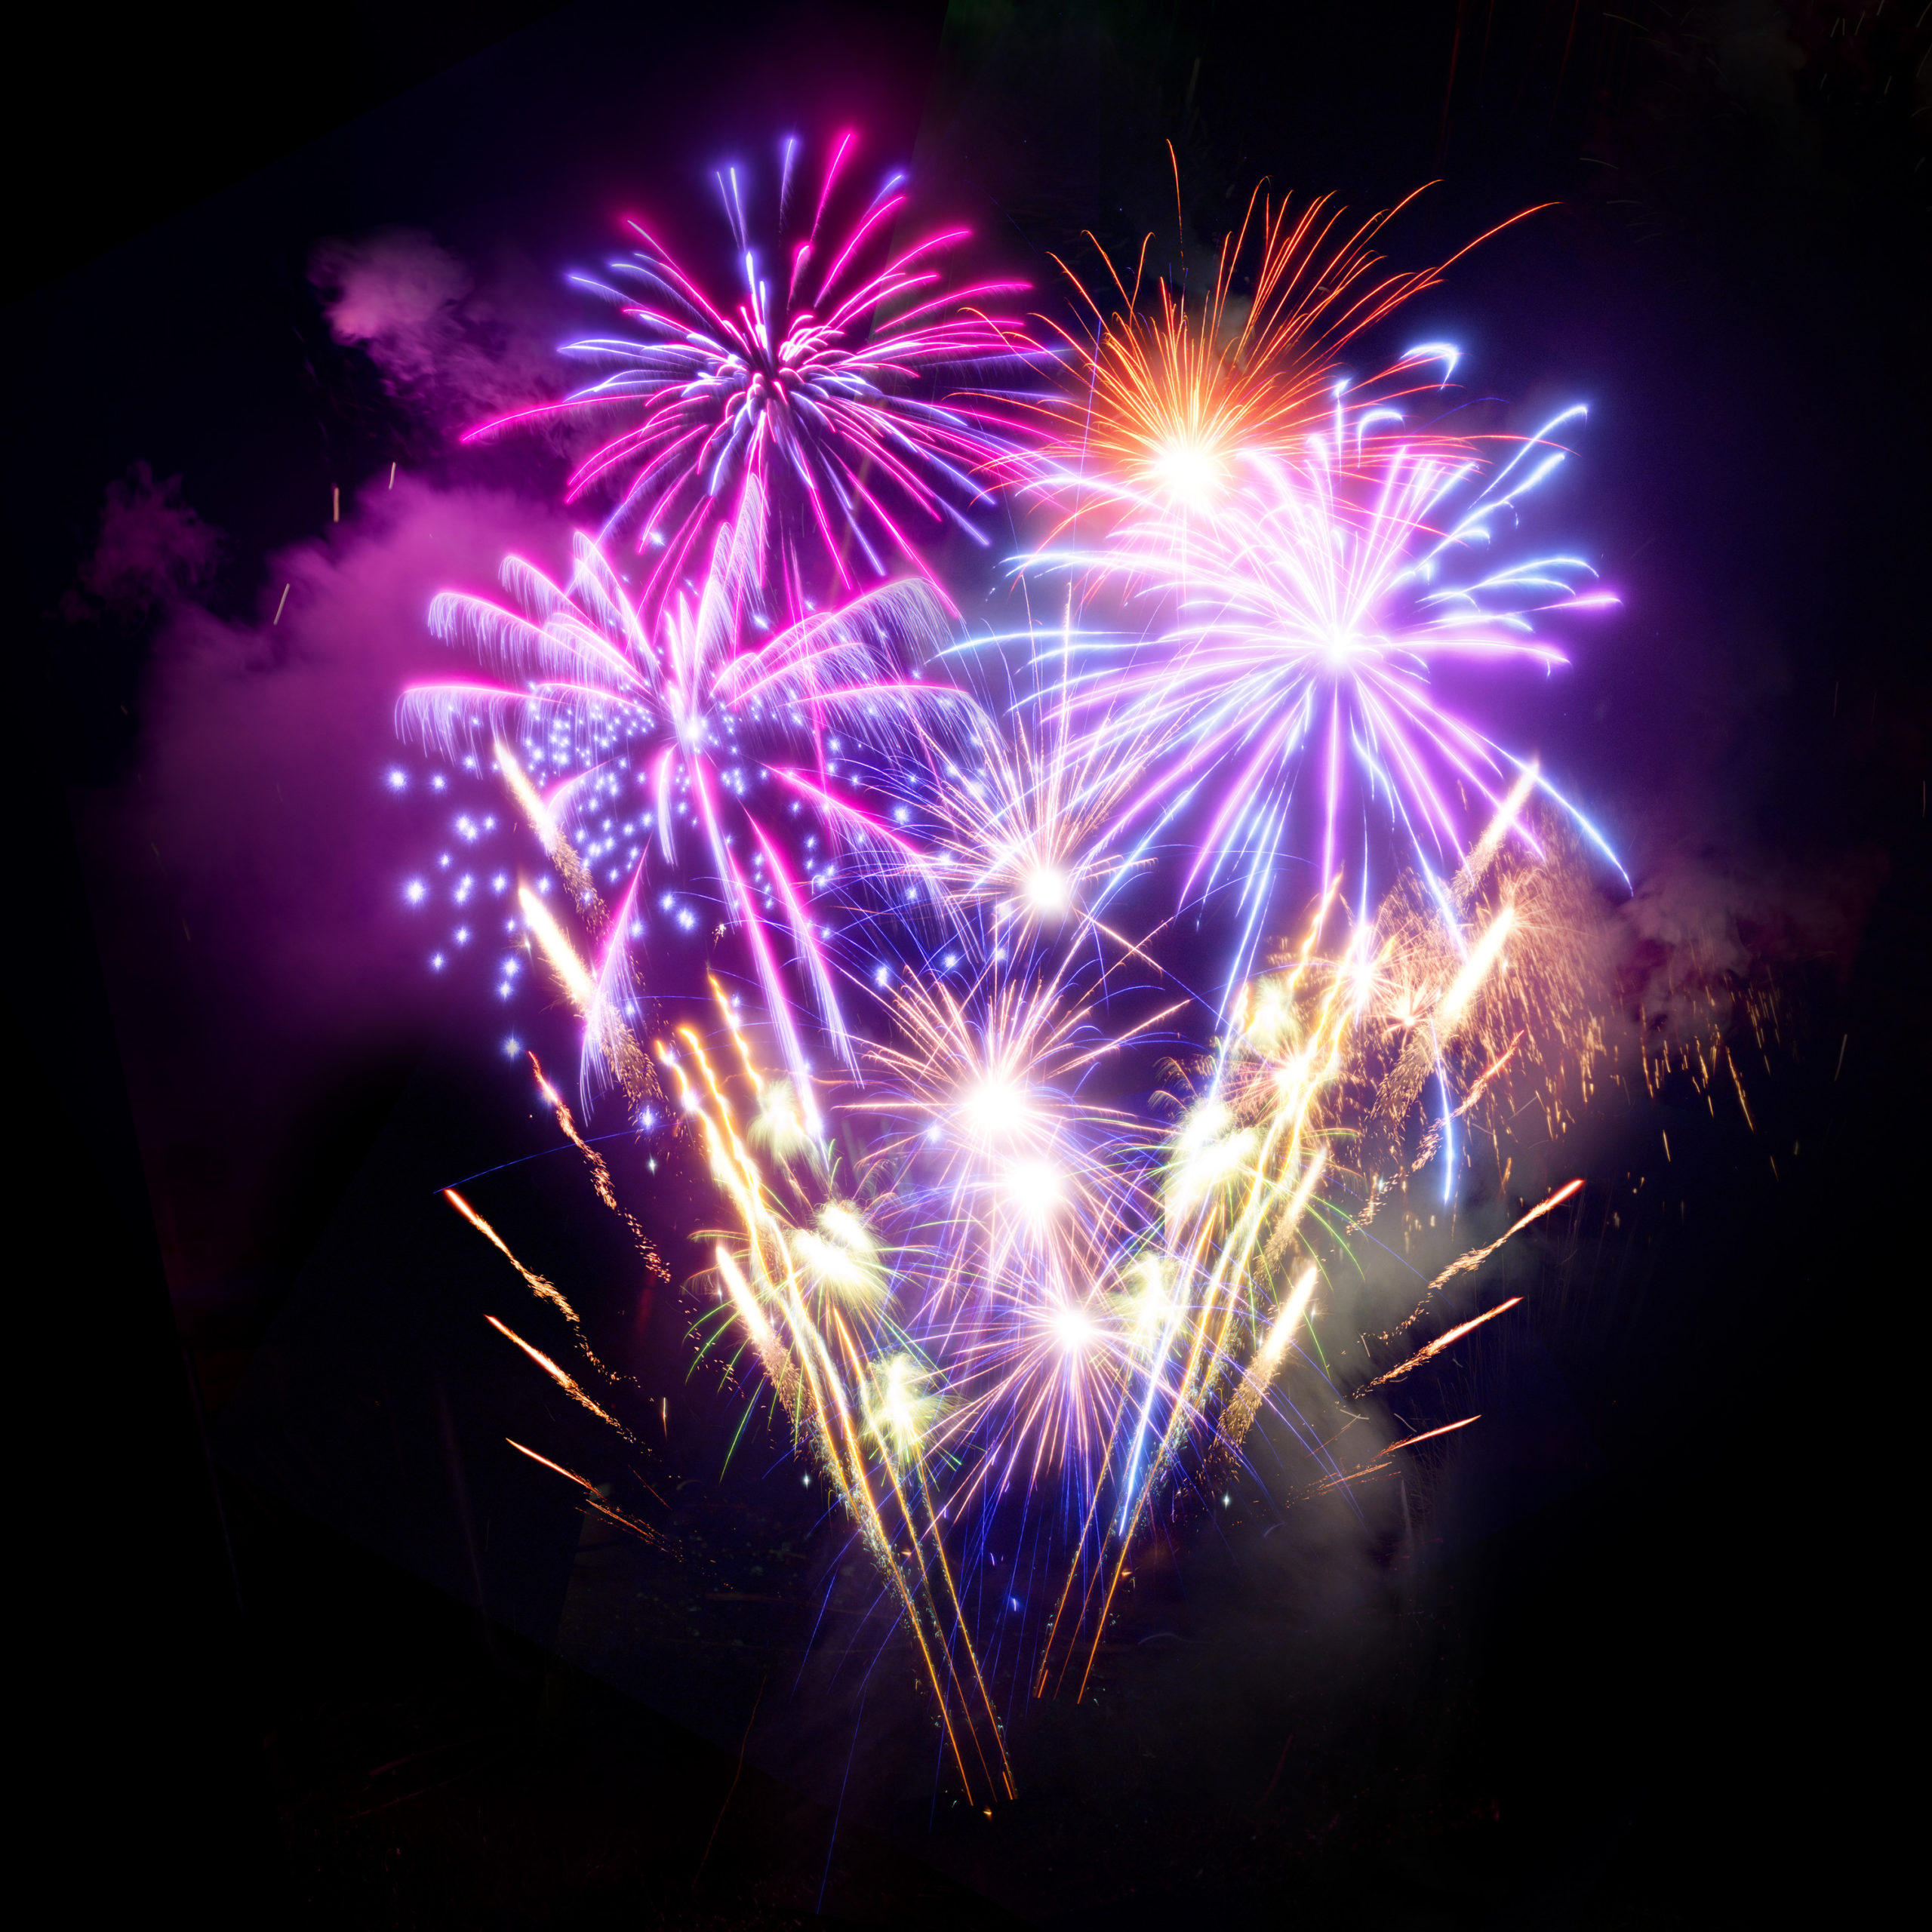 Bruce Power hosting “Community Appreciation” fireworks display